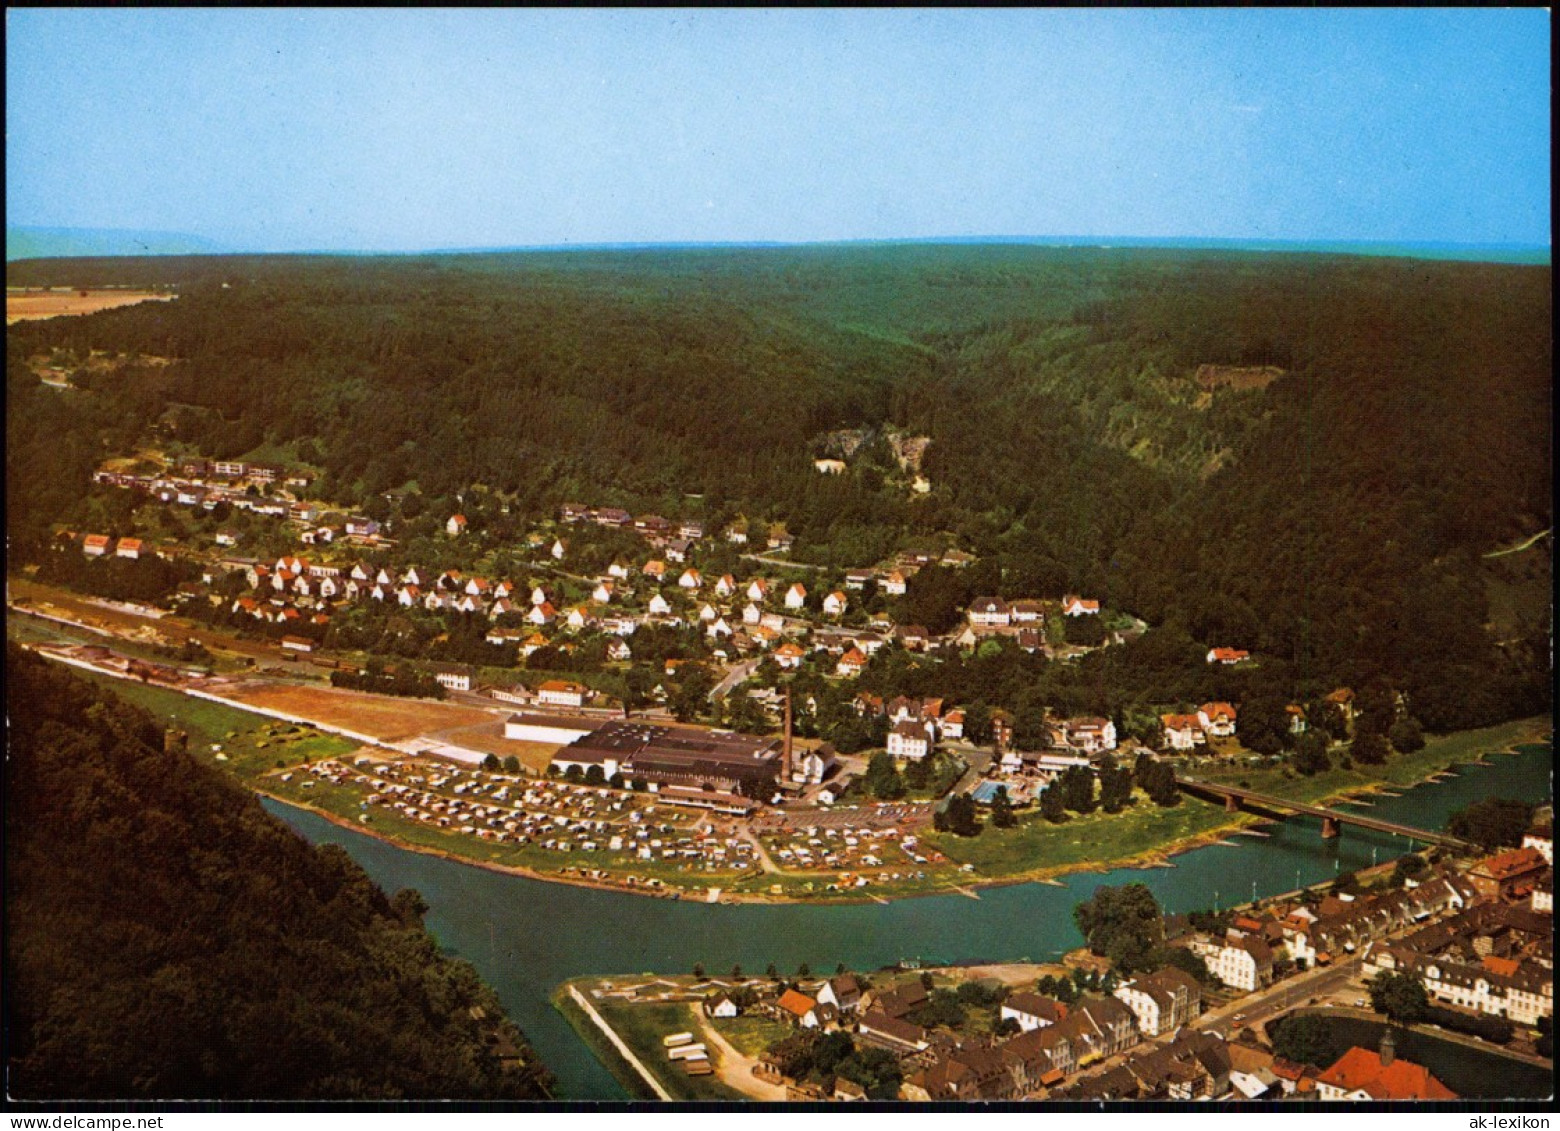 Ansichtskarte Bad Karlshafen Luftbild 1975 - Bad Karlshafen